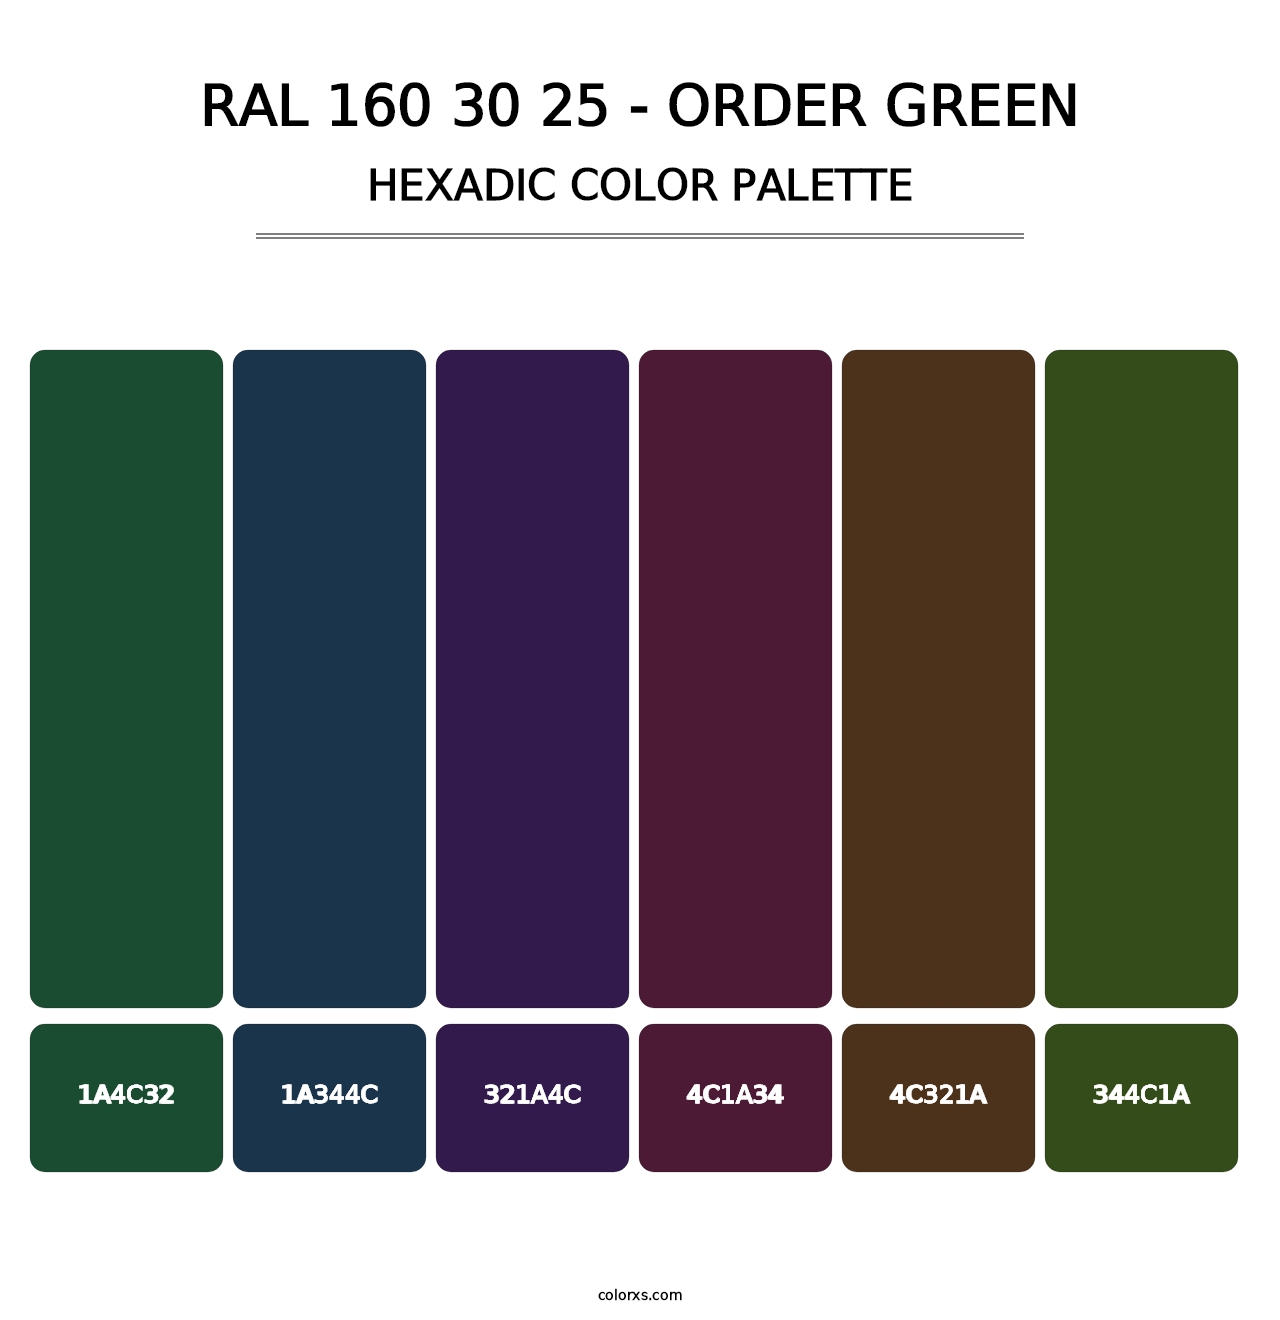 RAL 160 30 25 - Order Green - Hexadic Color Palette